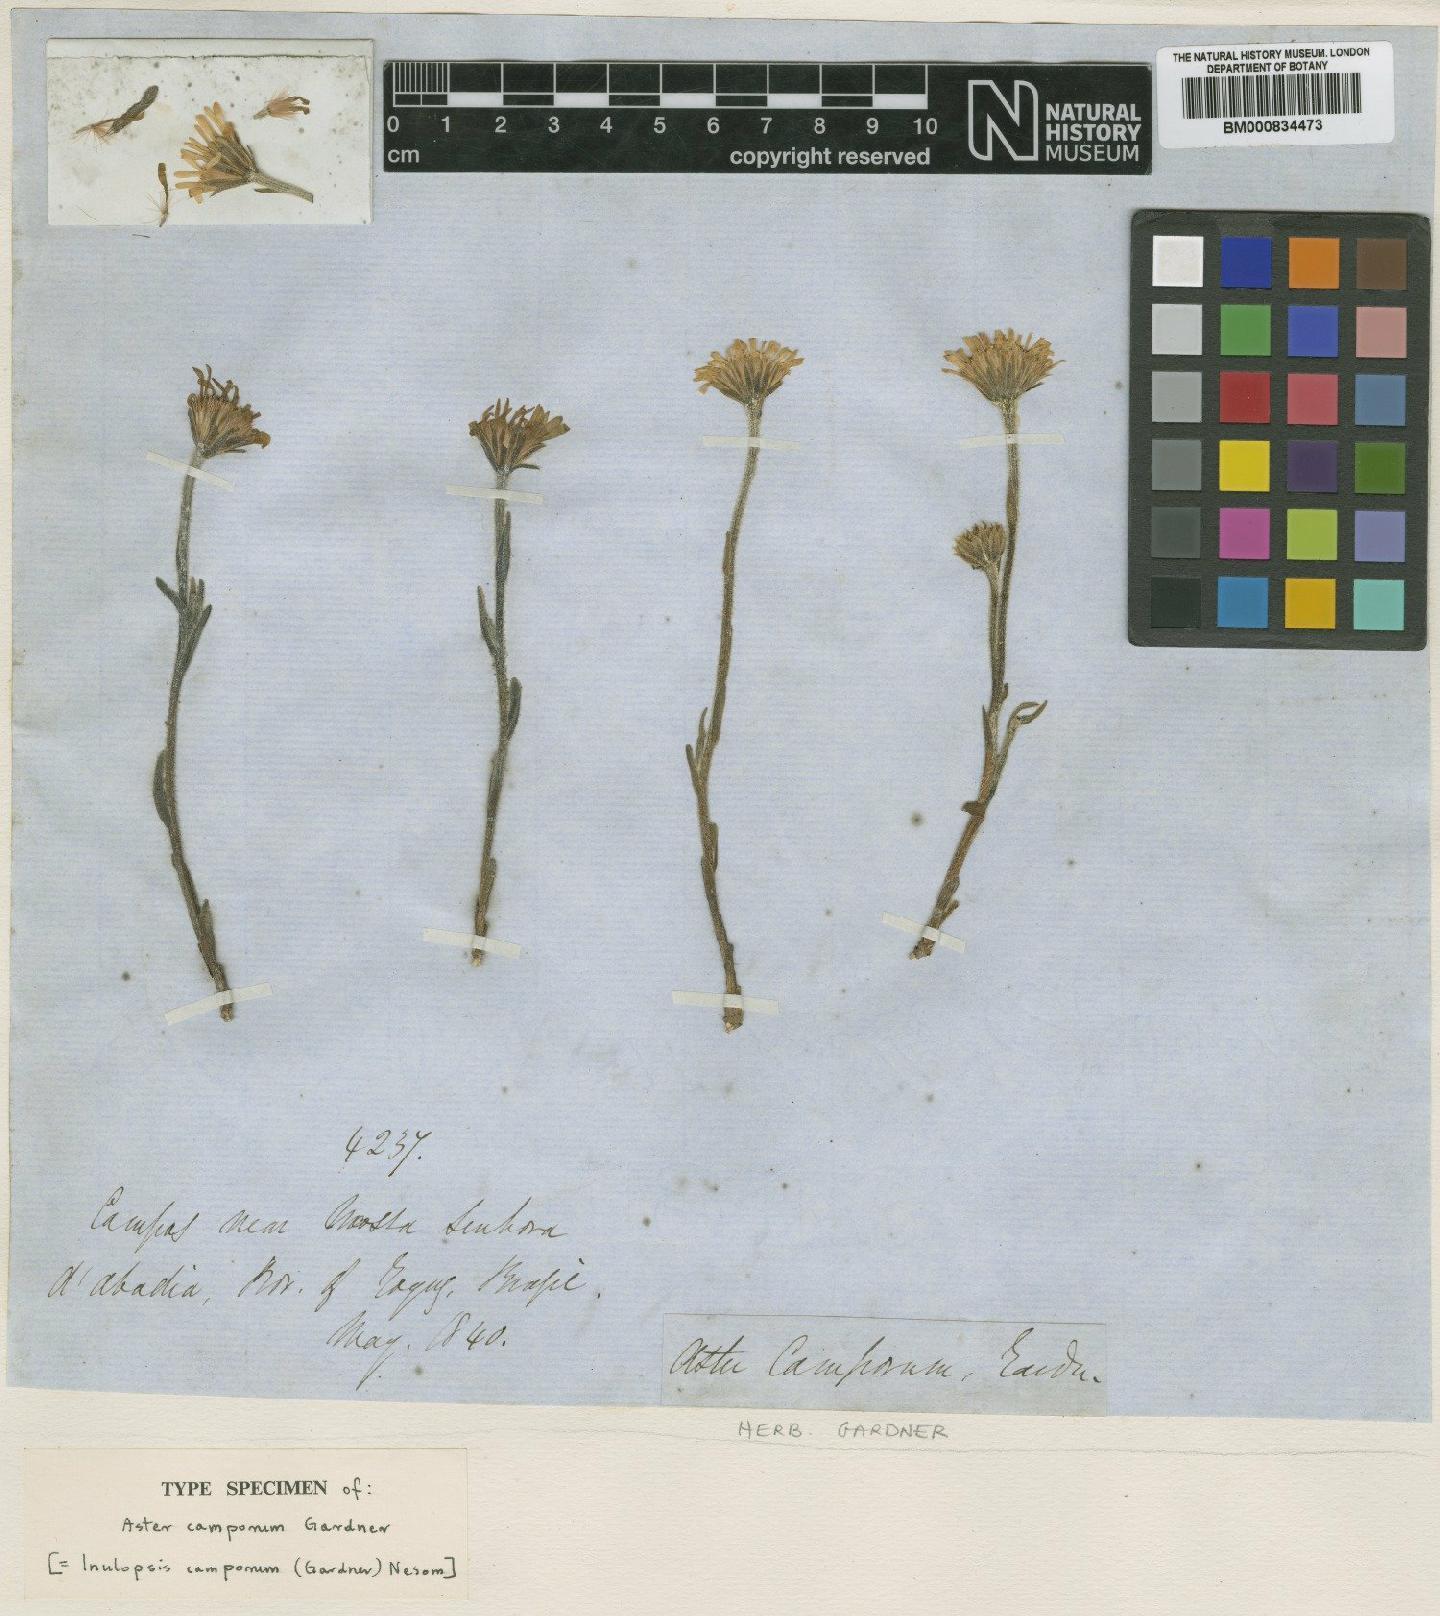 To NHMUK collection (Inulopsis camporum (Gardner) G.L.Nesom; Type; NHMUK:ecatalogue:4971351)